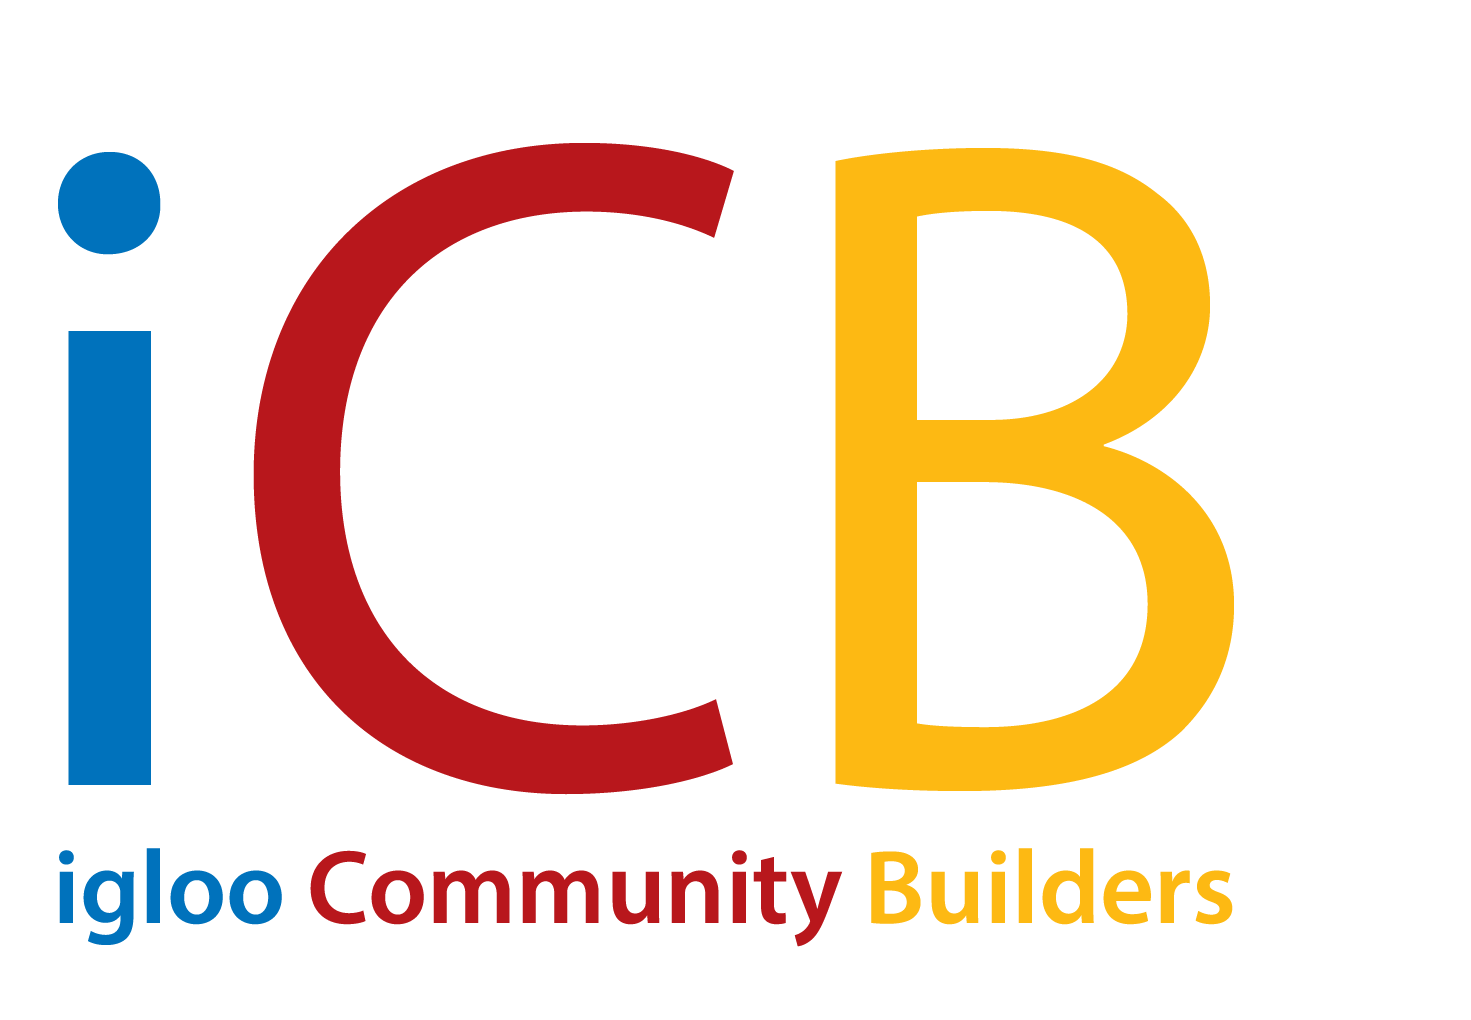 igloo Community Builders 